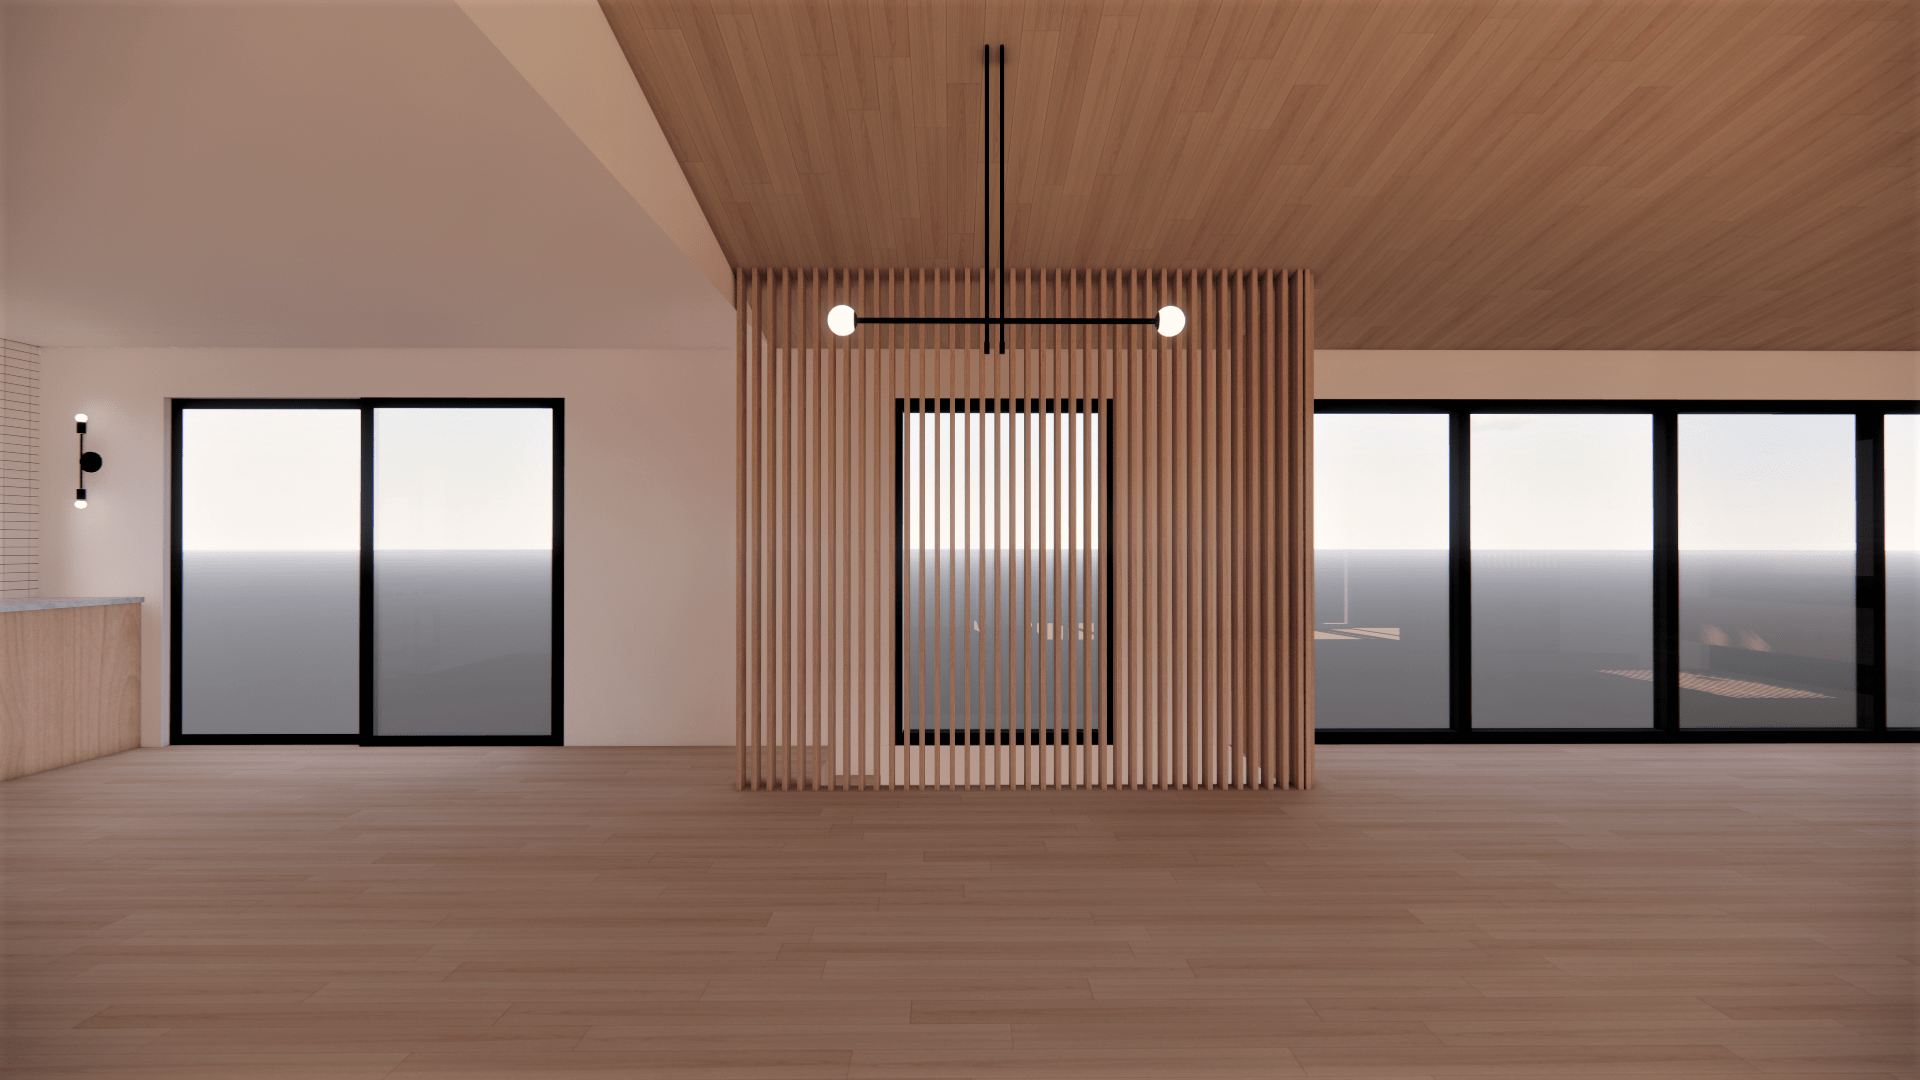 Minimalist modern residential interior design with slats, windows, sleek pendant